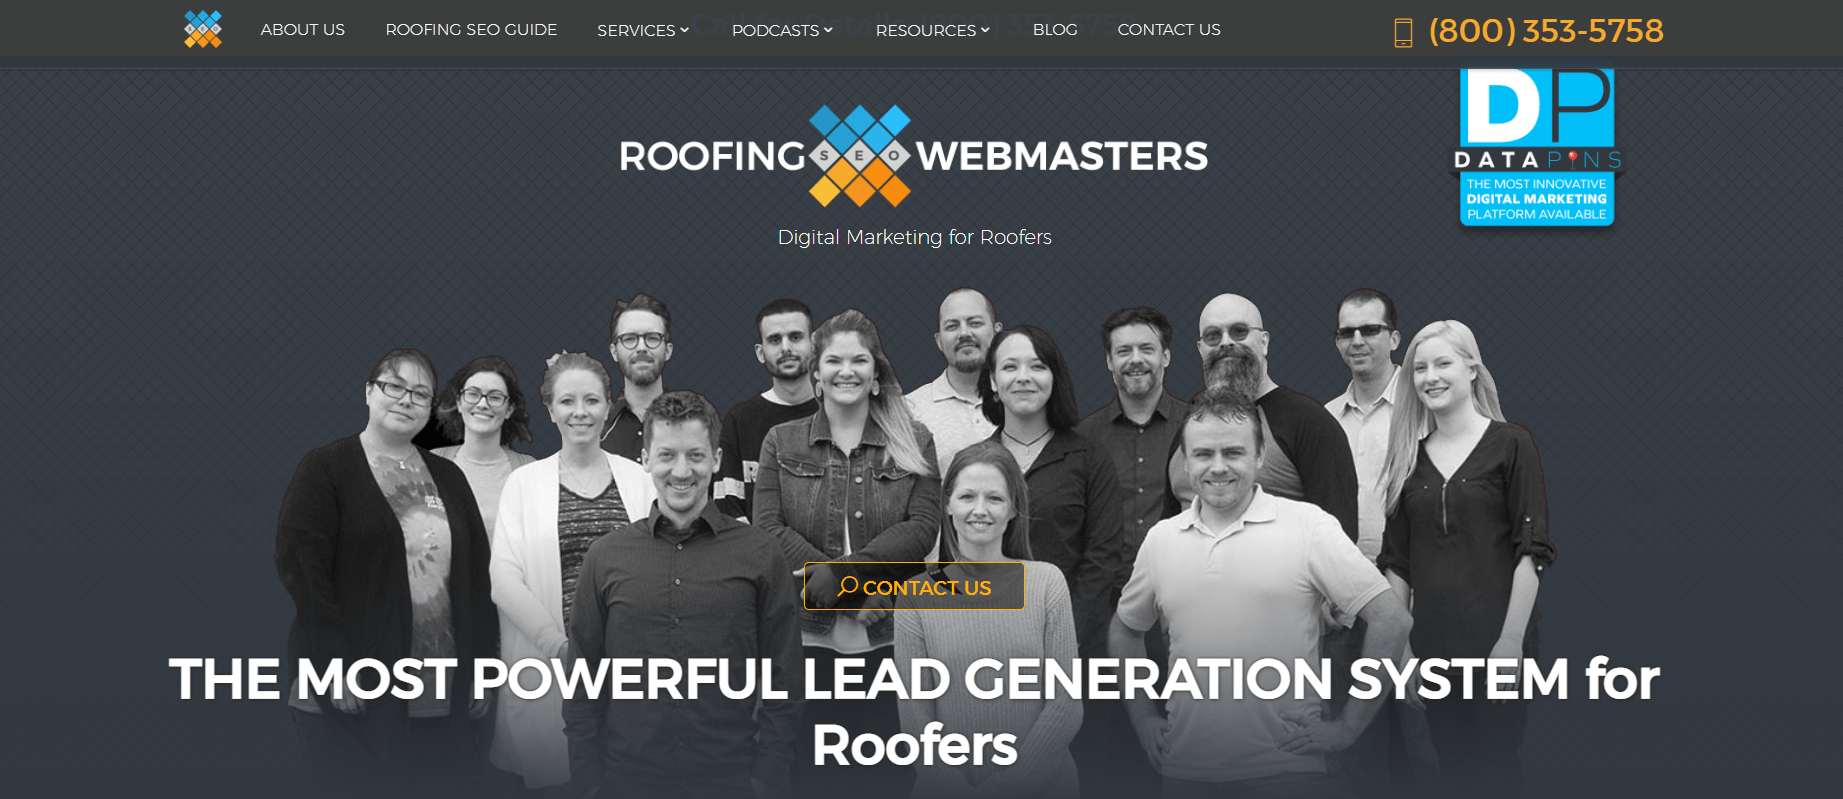 Roofing Webmasters digital marketing